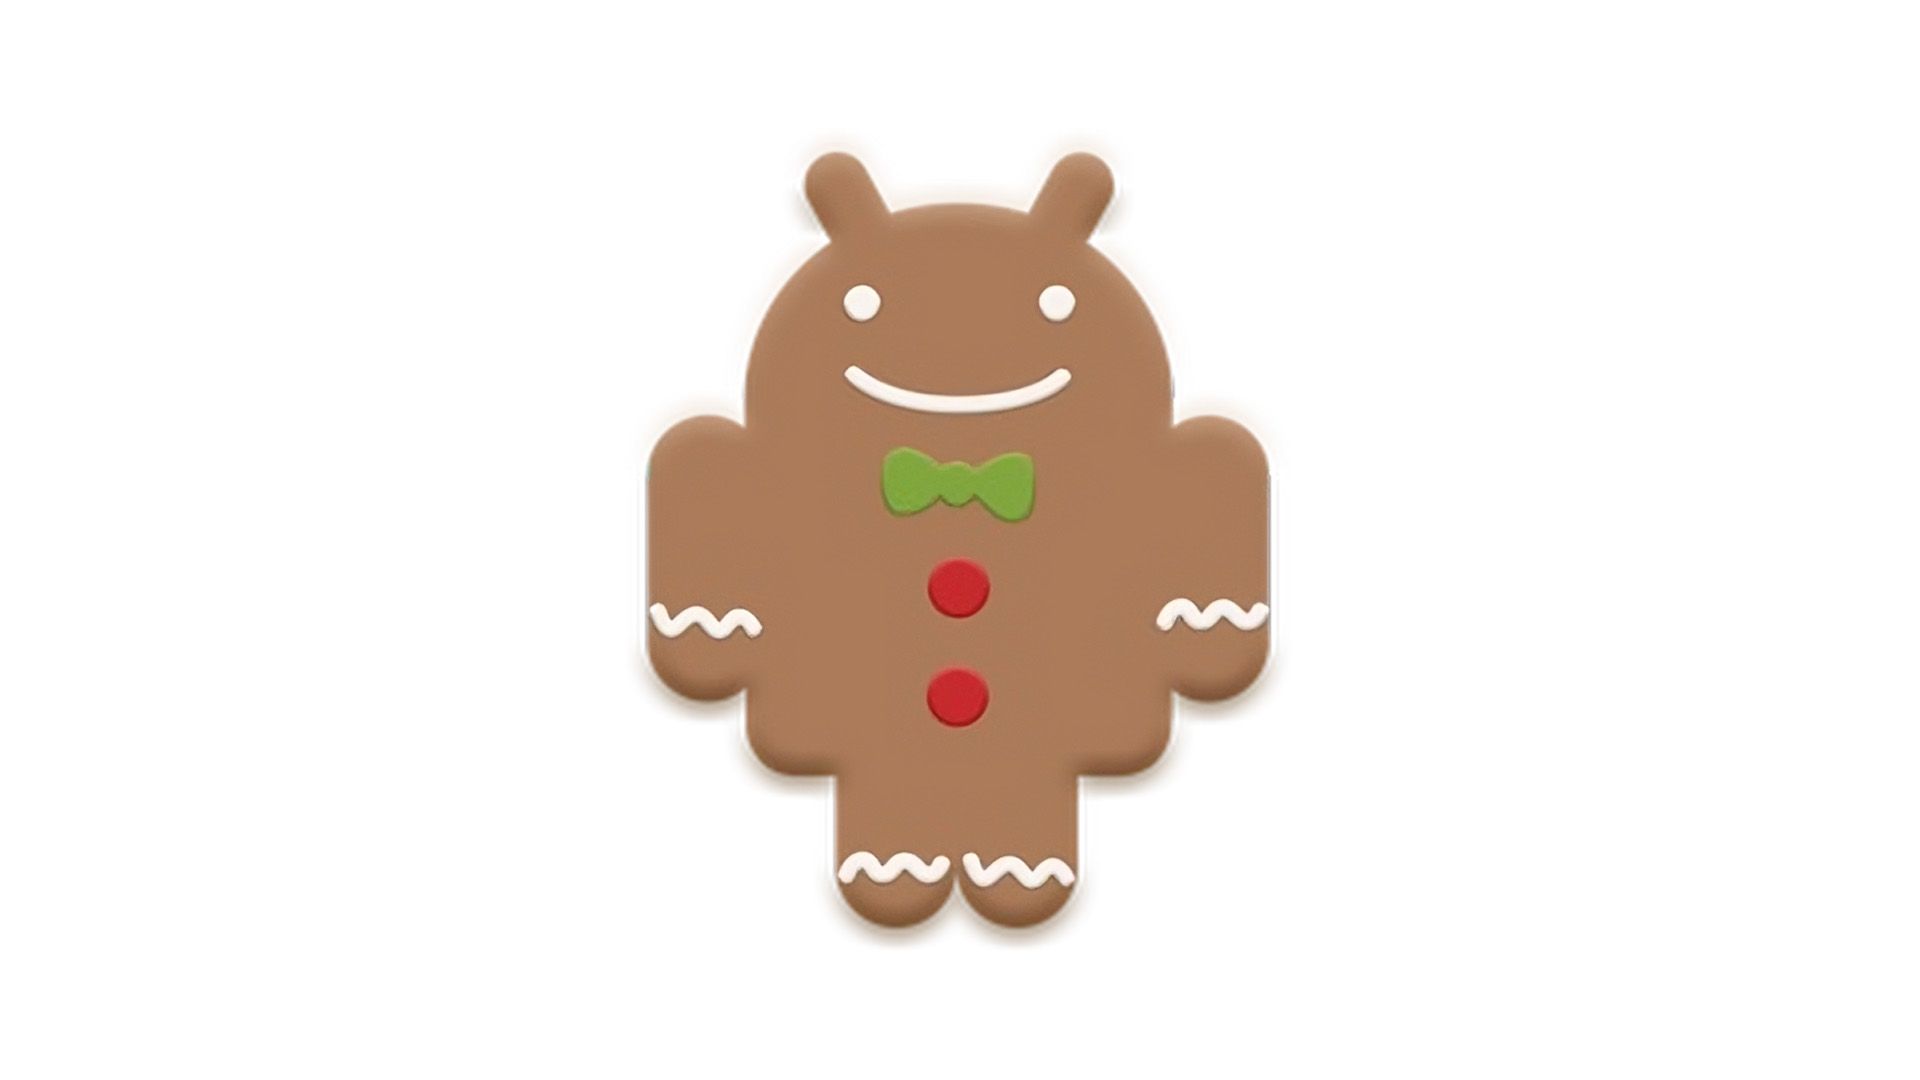 Logotipo do robô Android Gingerbread